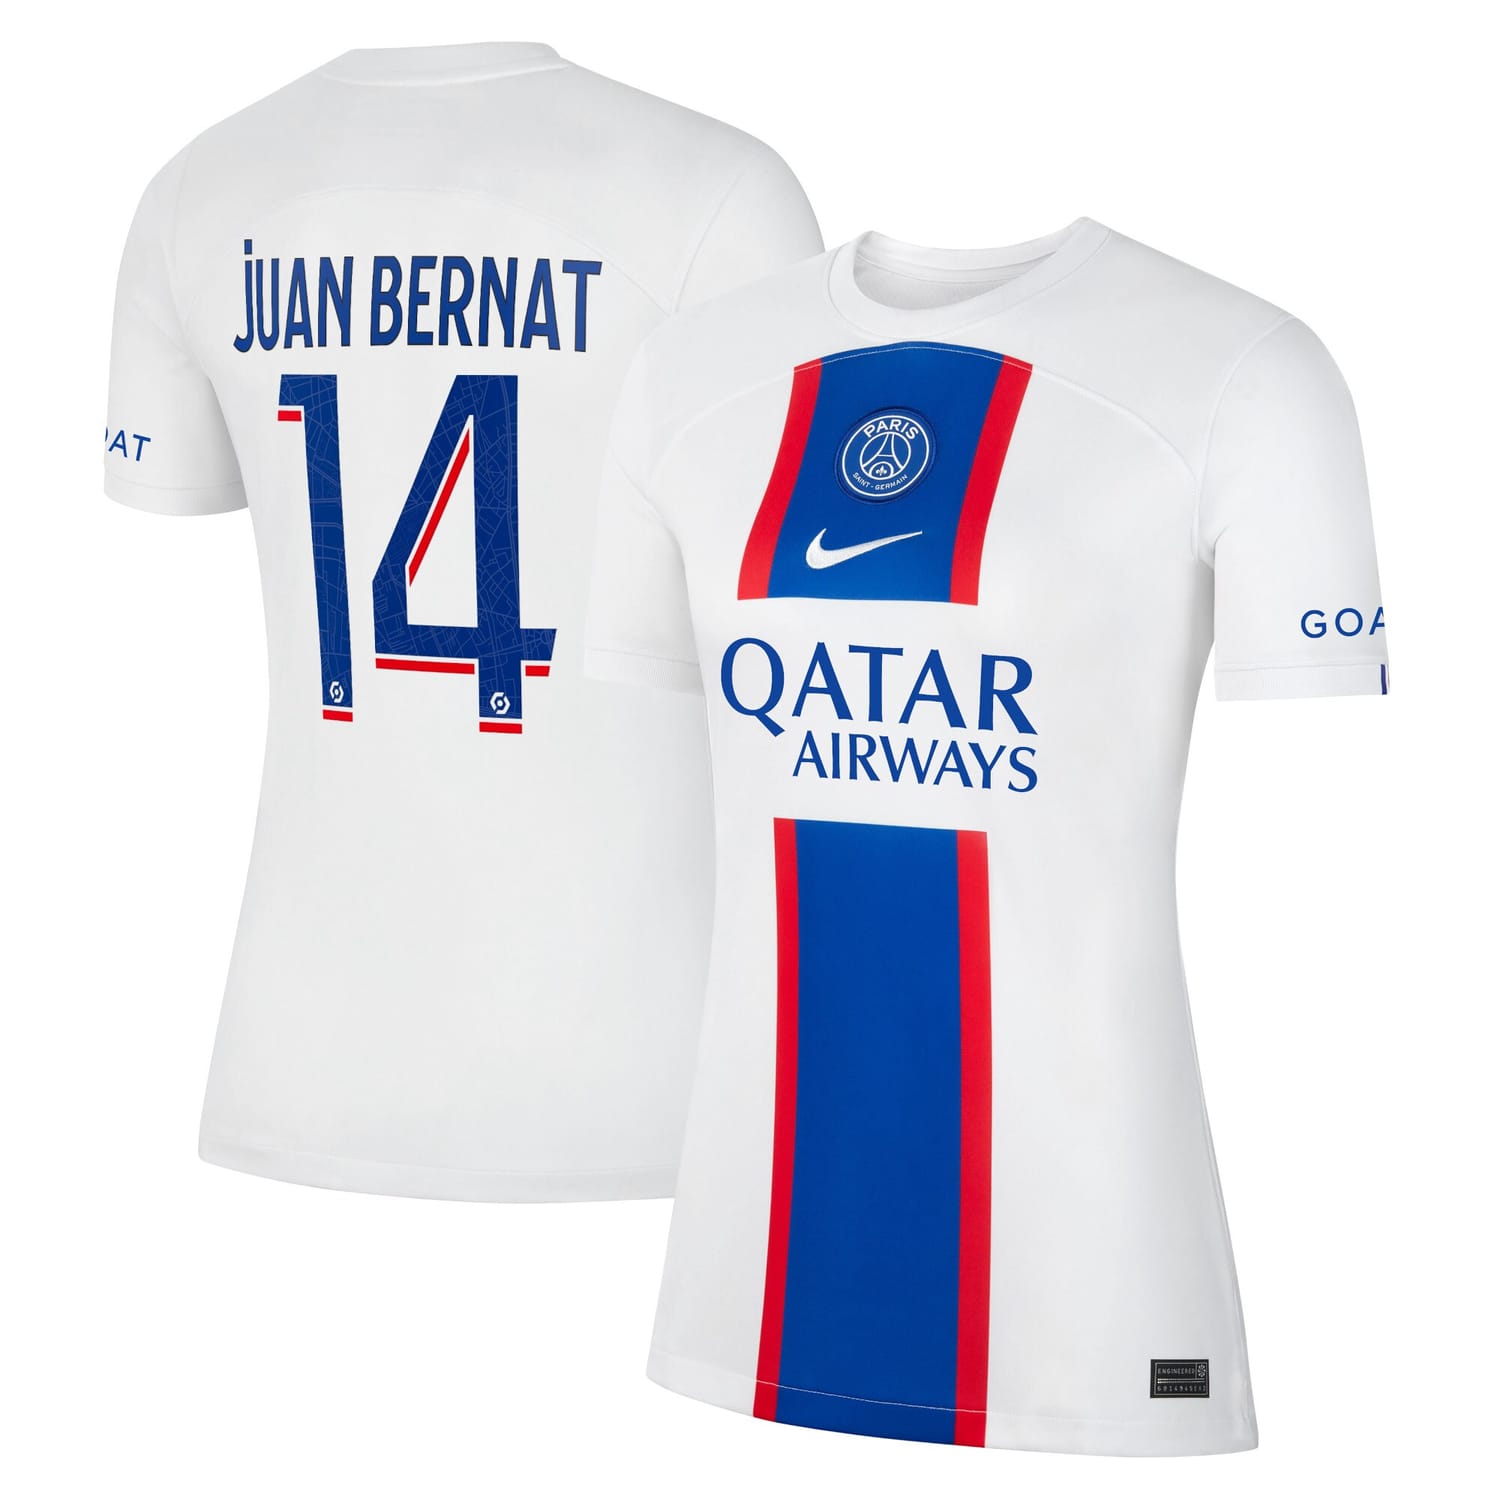 Ligue 1 Paris Saint-Germain Third Jersey Shirt 2022-23 player Juan Bernat 14 printing for Women